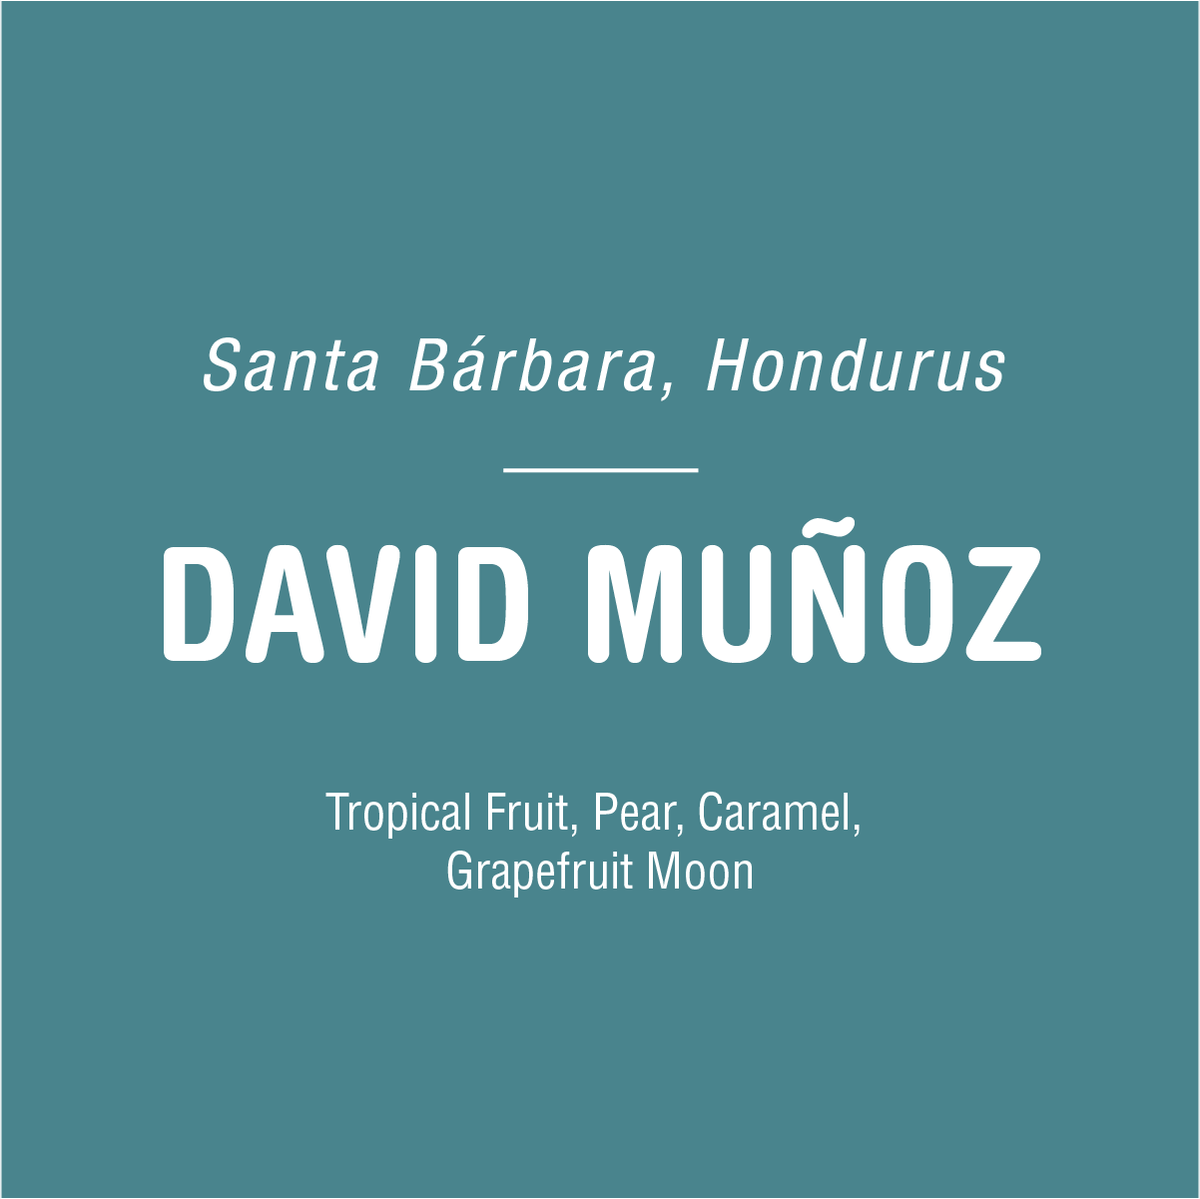 David Muñoz - Honduras